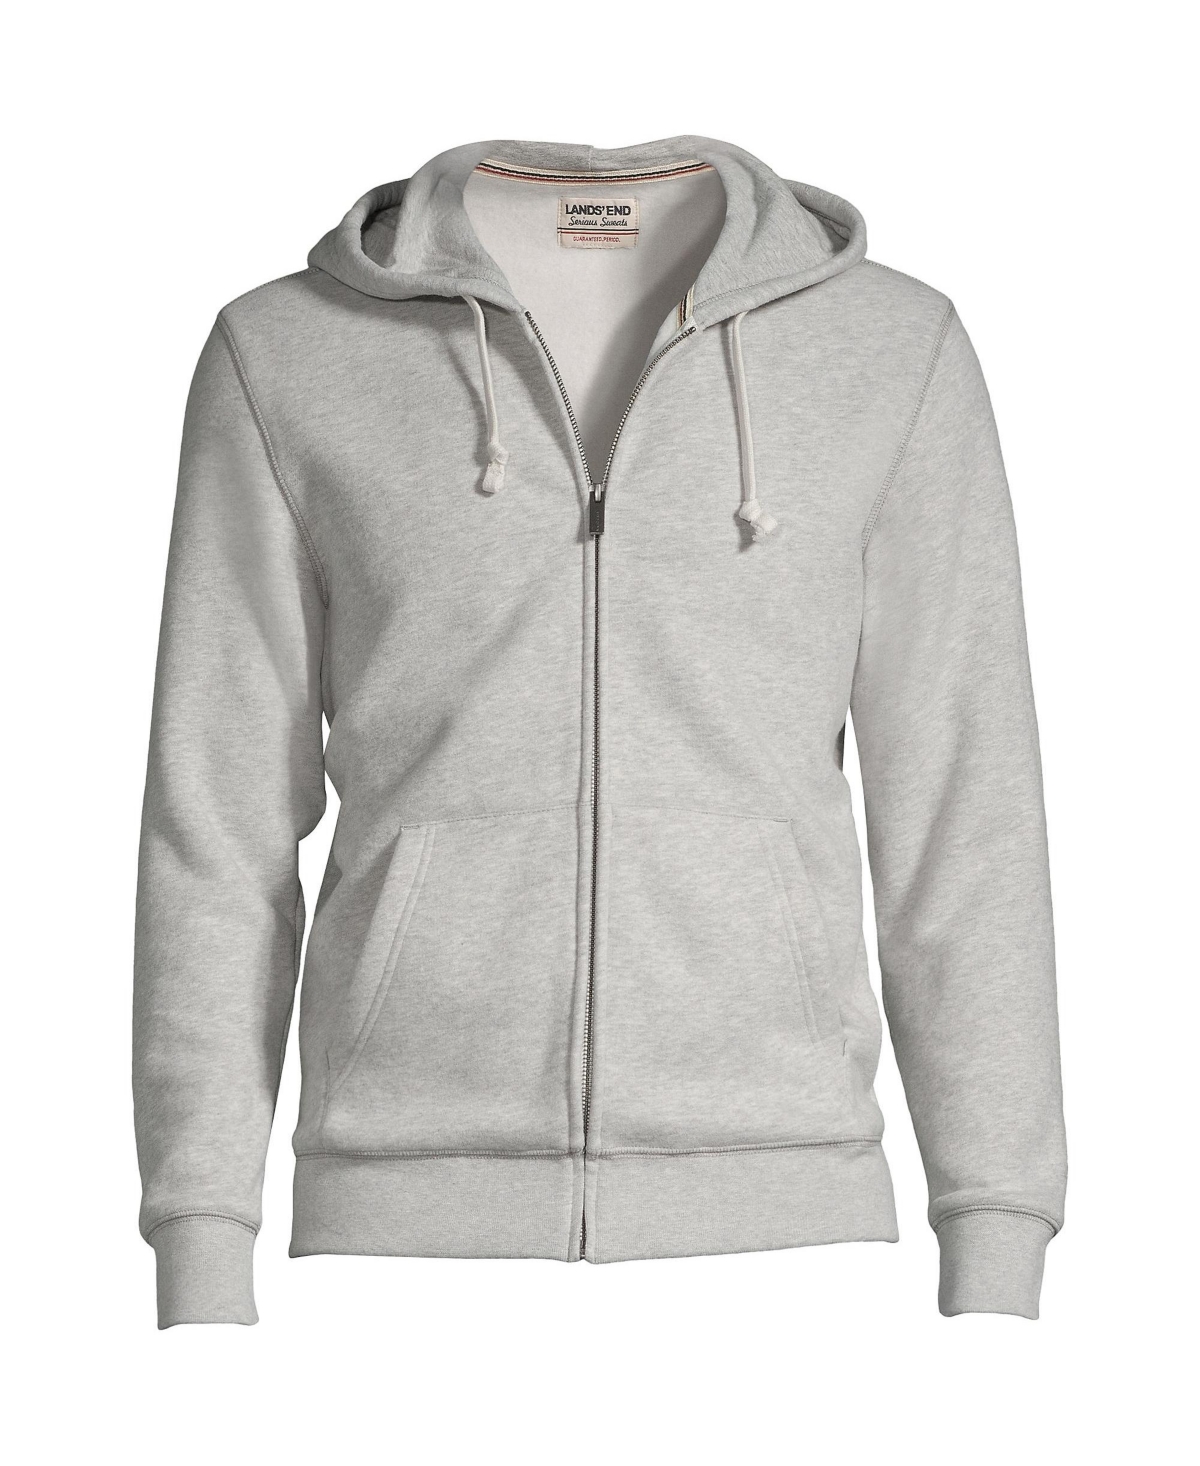 Men's Tall Serious Sweatshirt Full Zip Hoodie - Gray heather